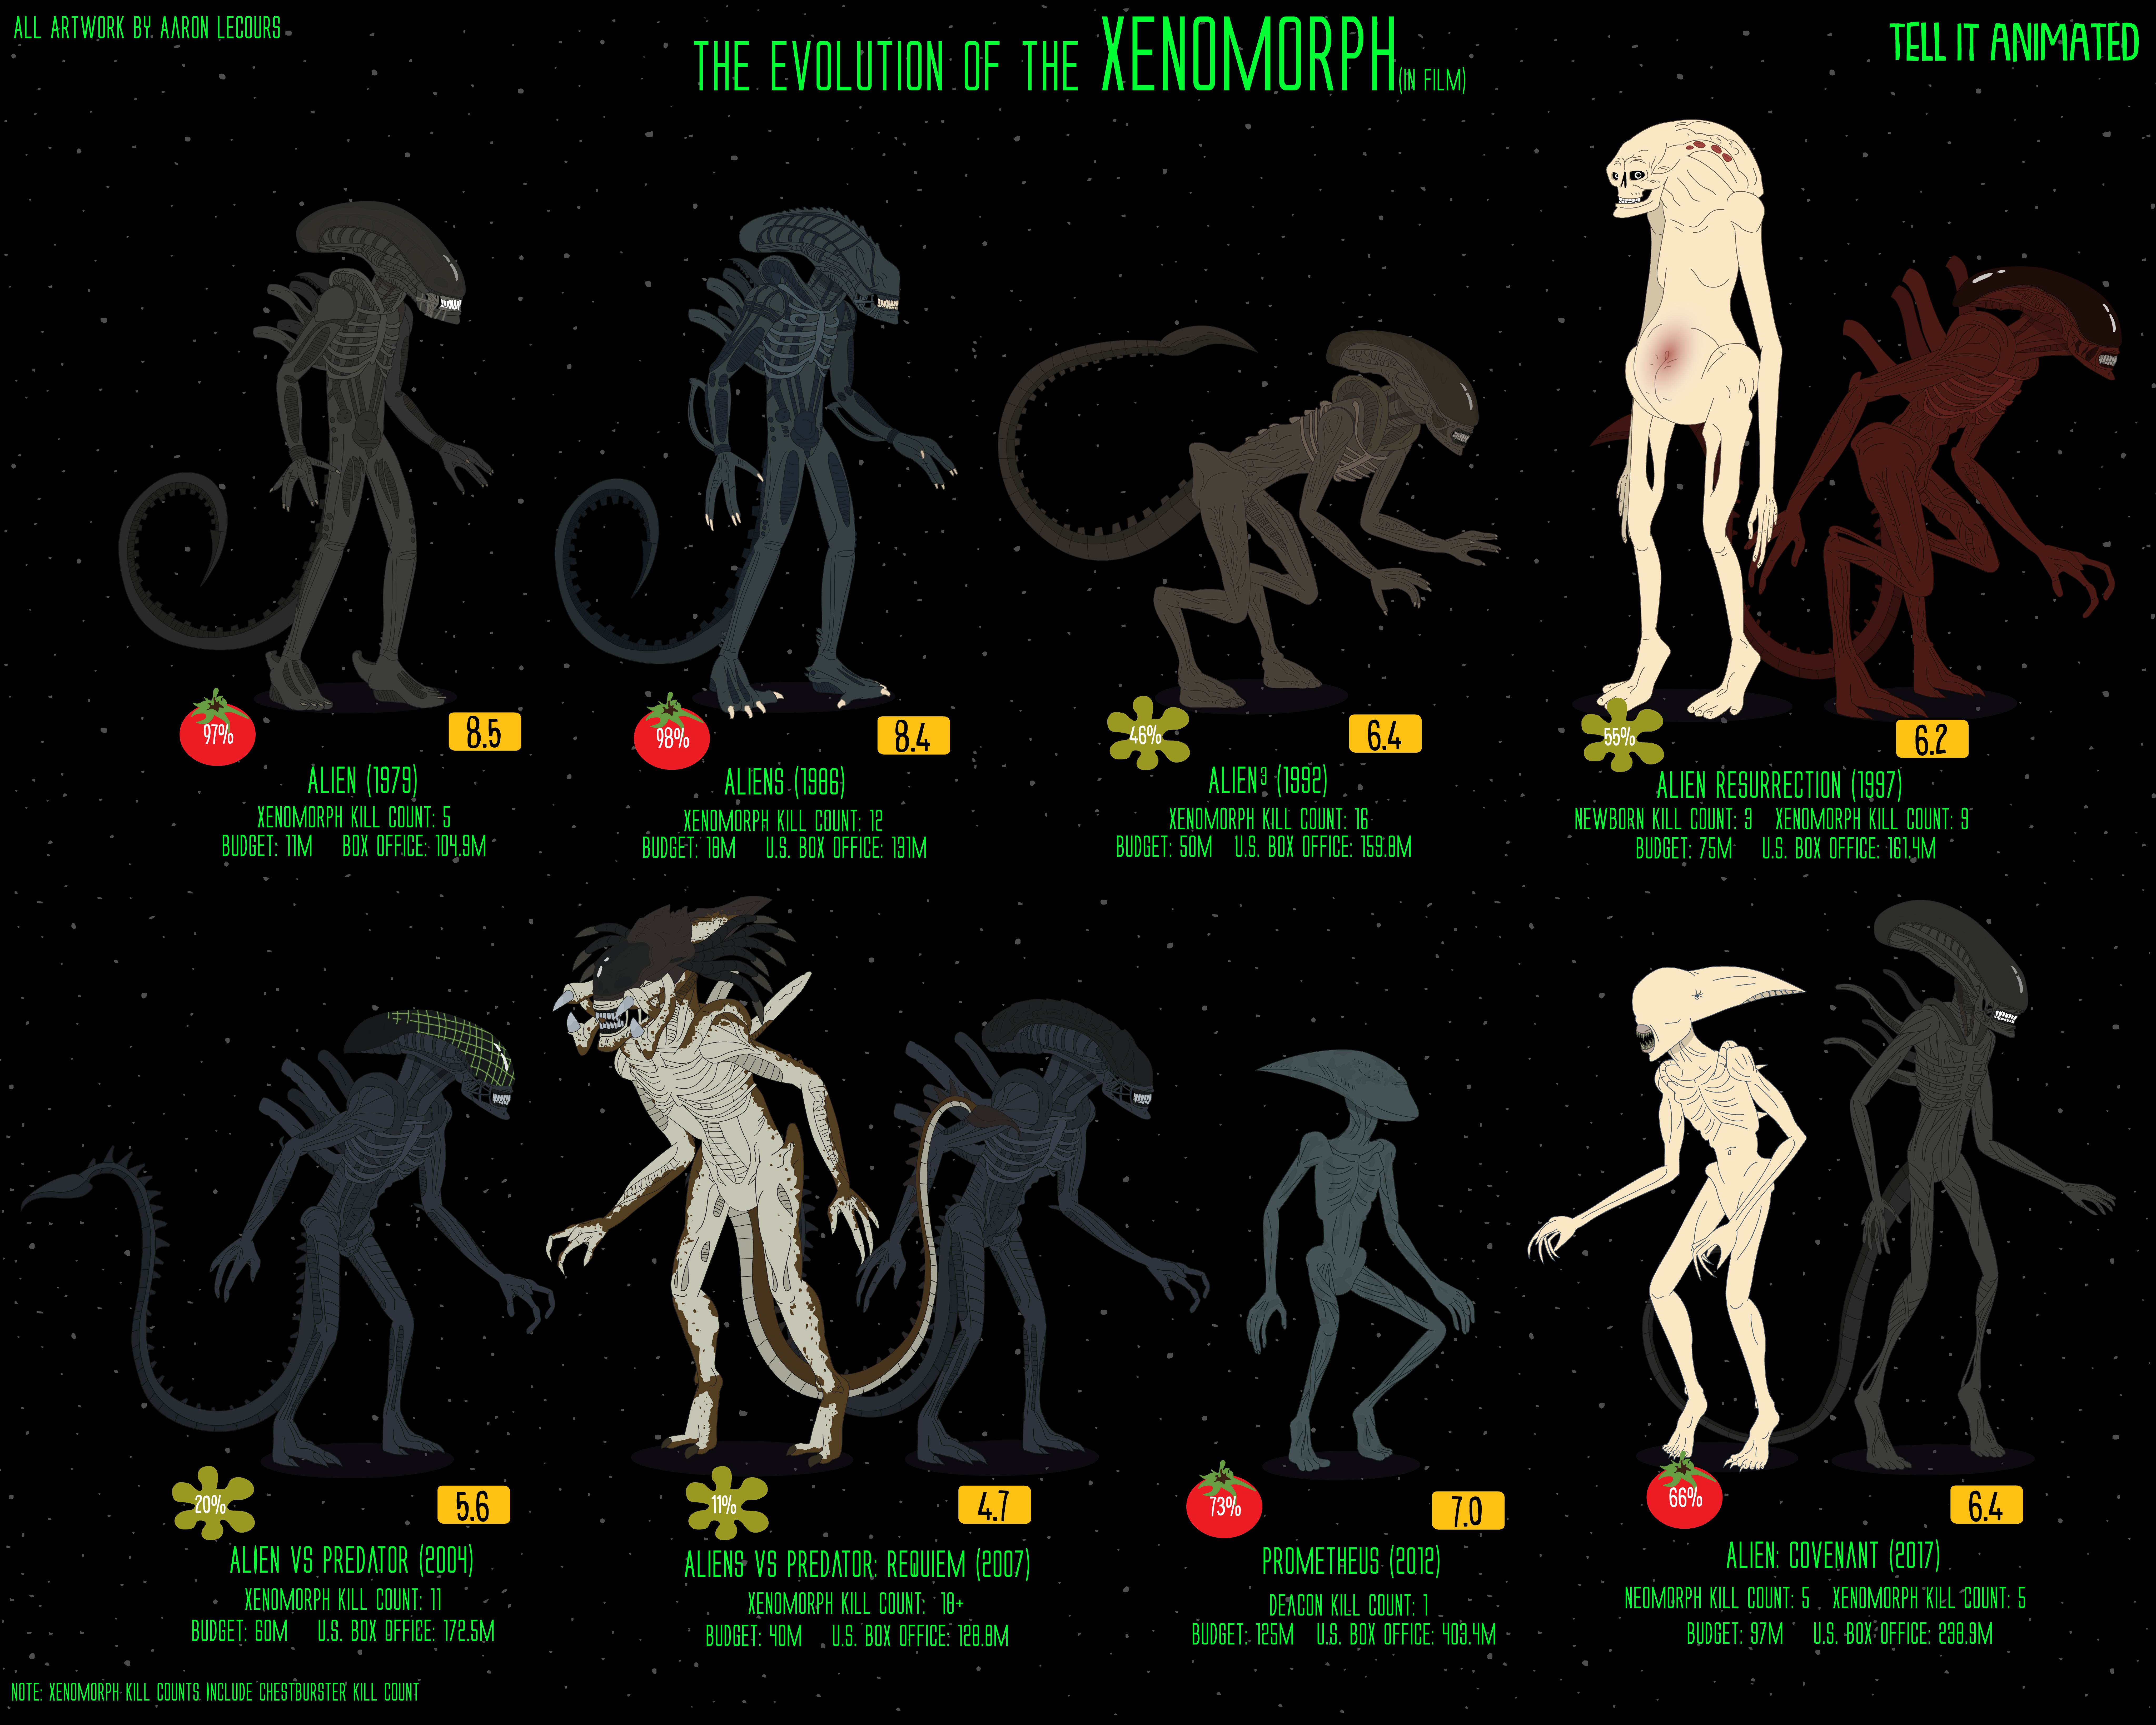 Alien Xenomorph Logo - Evolution, critical reception, and kill count of the Xenomorphs ...